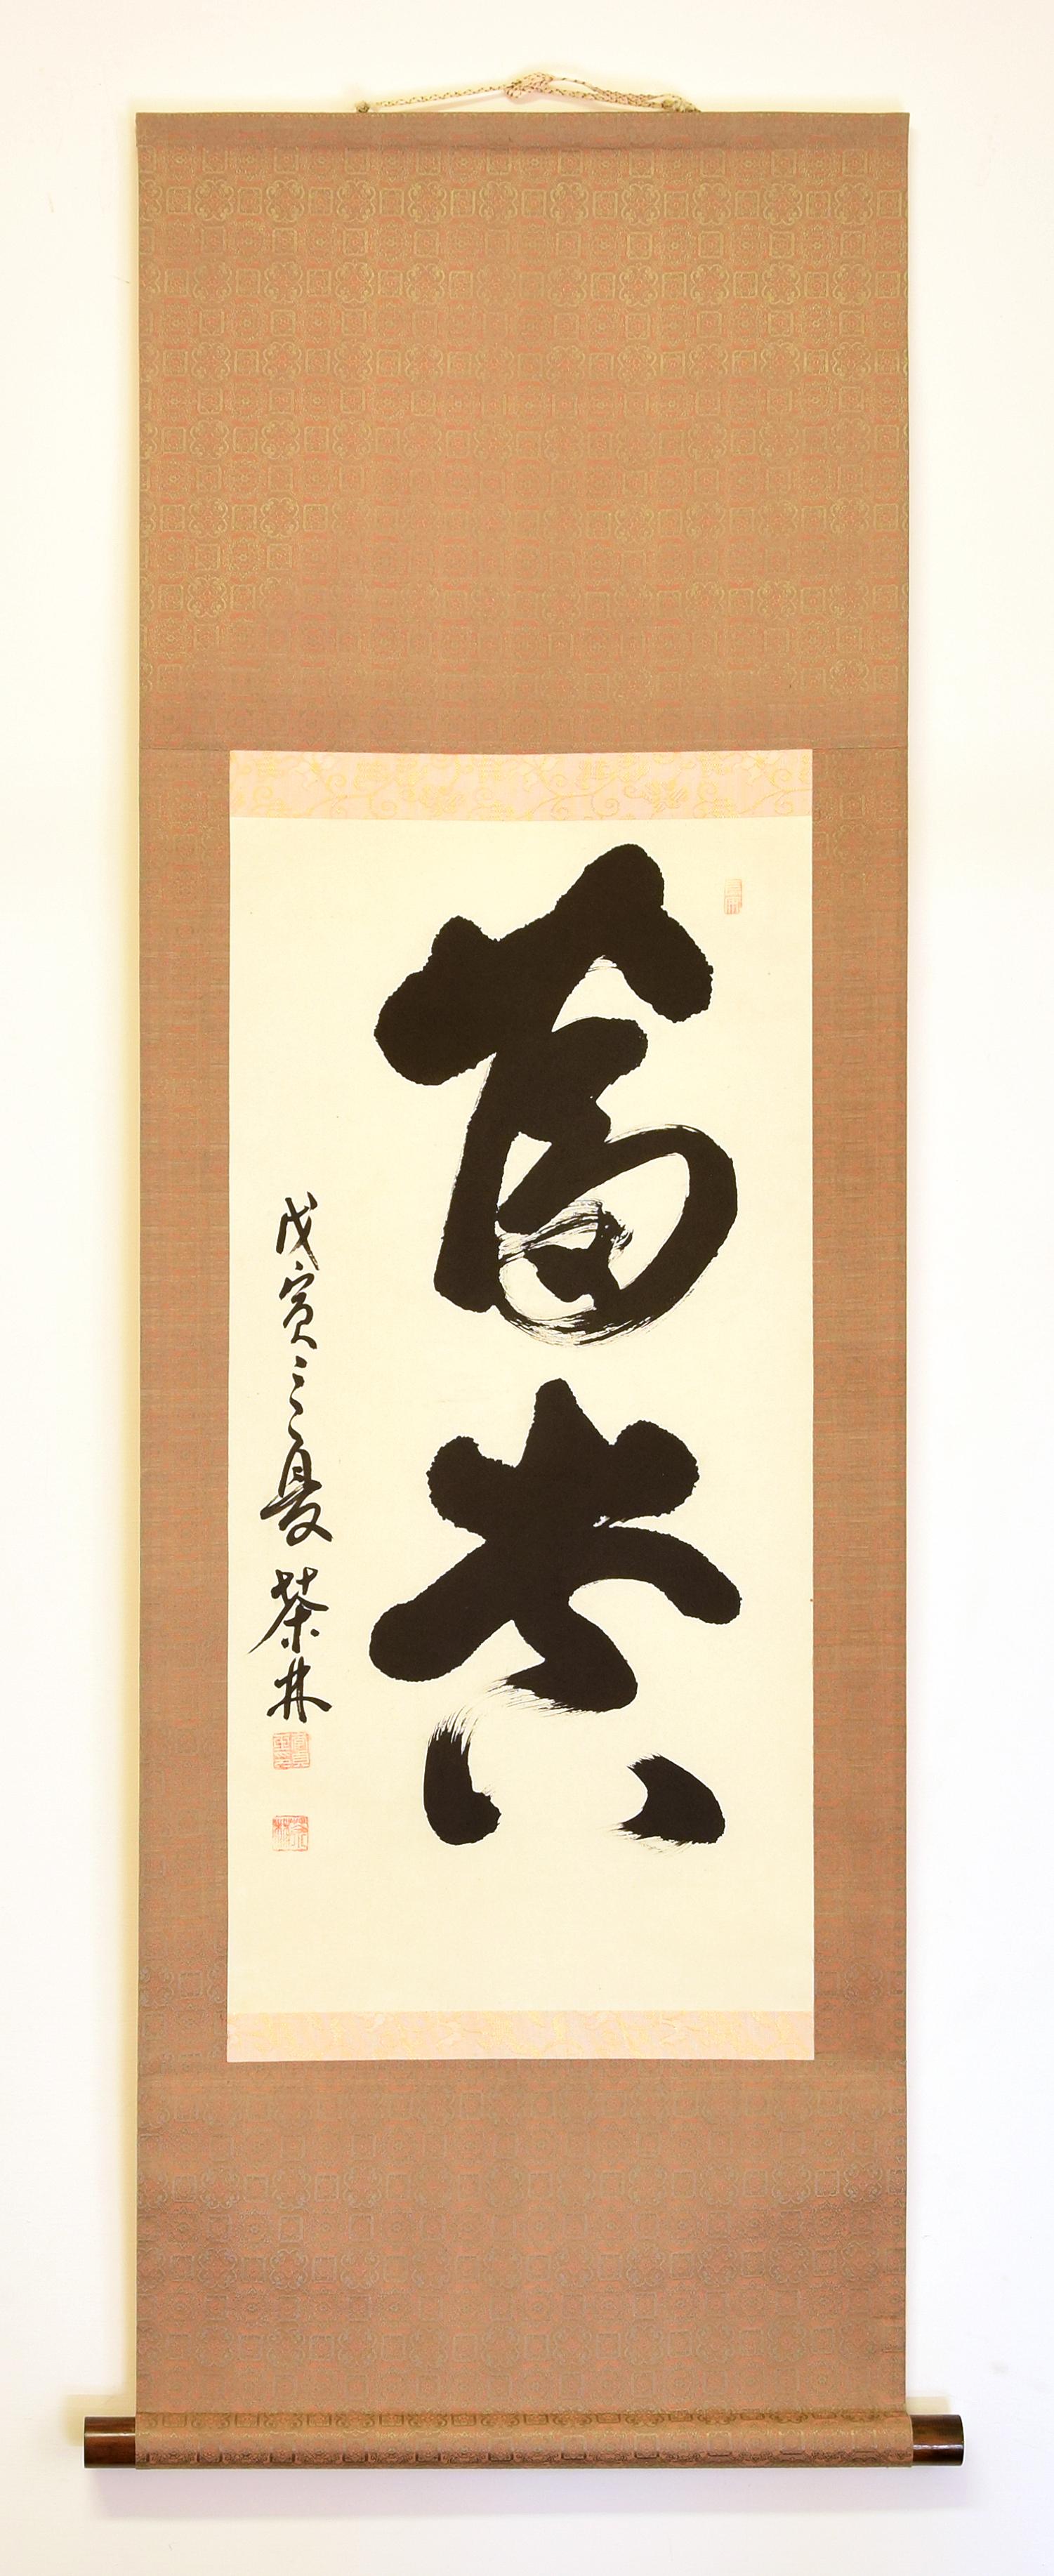 Fu Gui: Chinese Artistic Calligraphy by Li Zhen - 1938 1